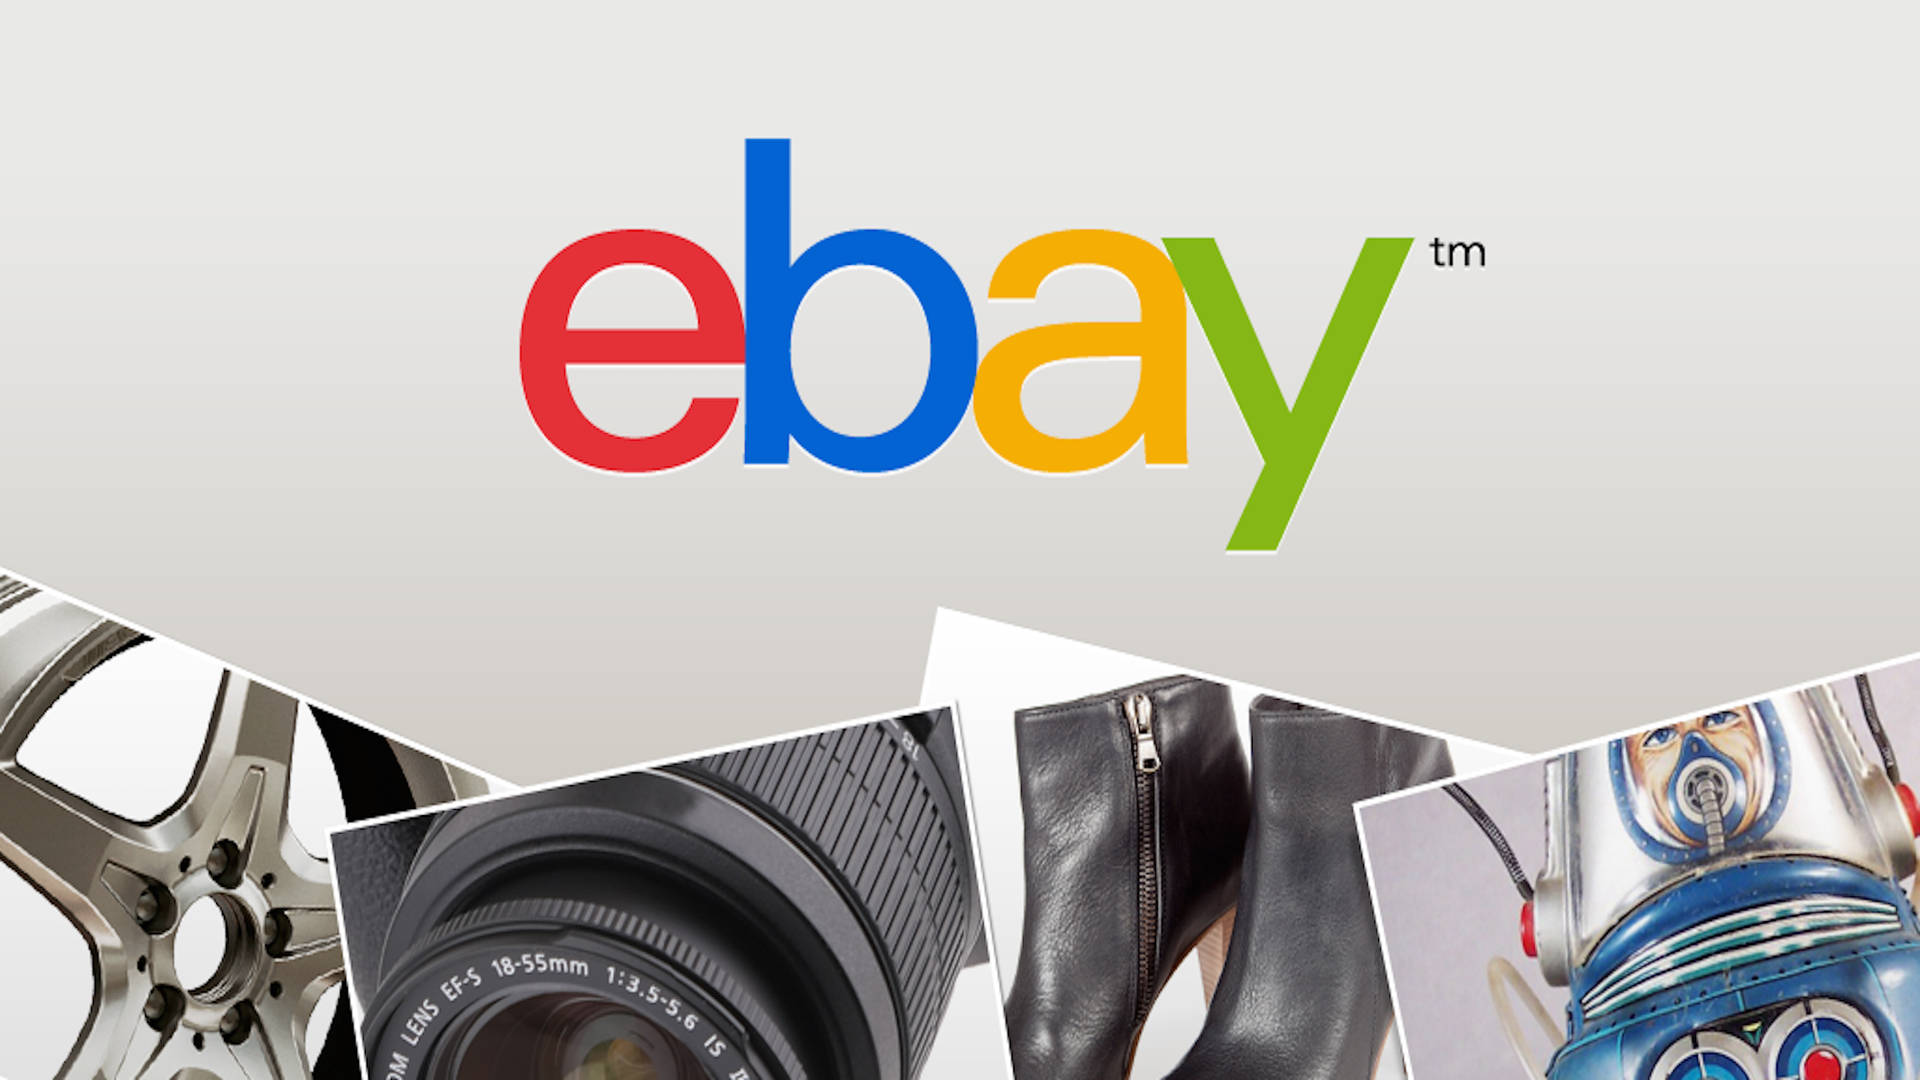 Ebay Website Logo Background